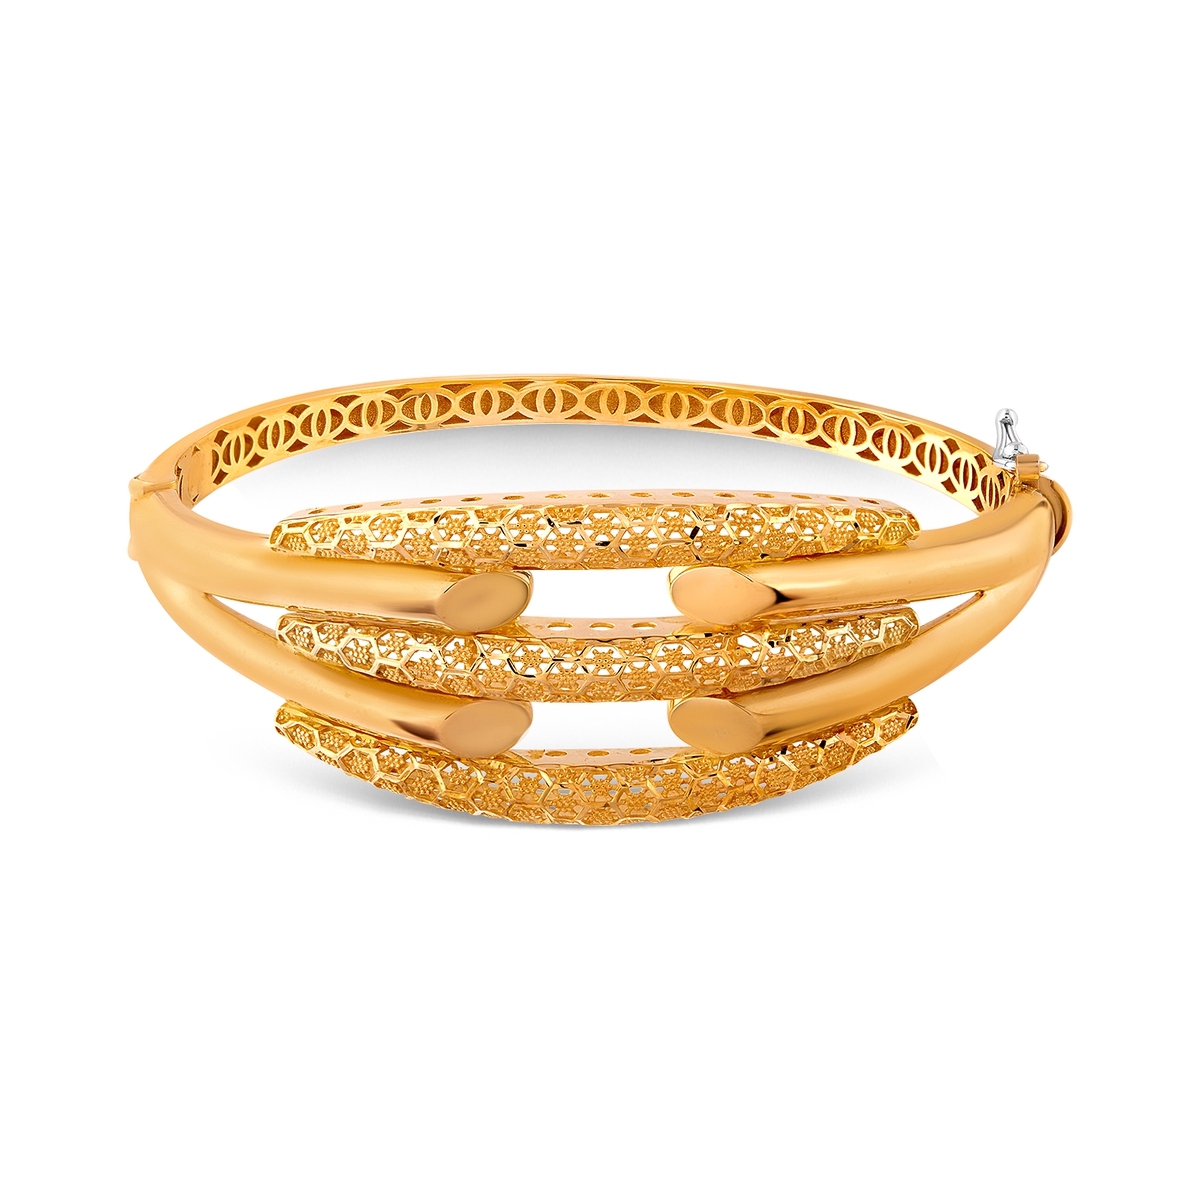 Traditional Gold Bracelet Turkish Work Wicker Stock Photo 1473508100 |  Shutterstock